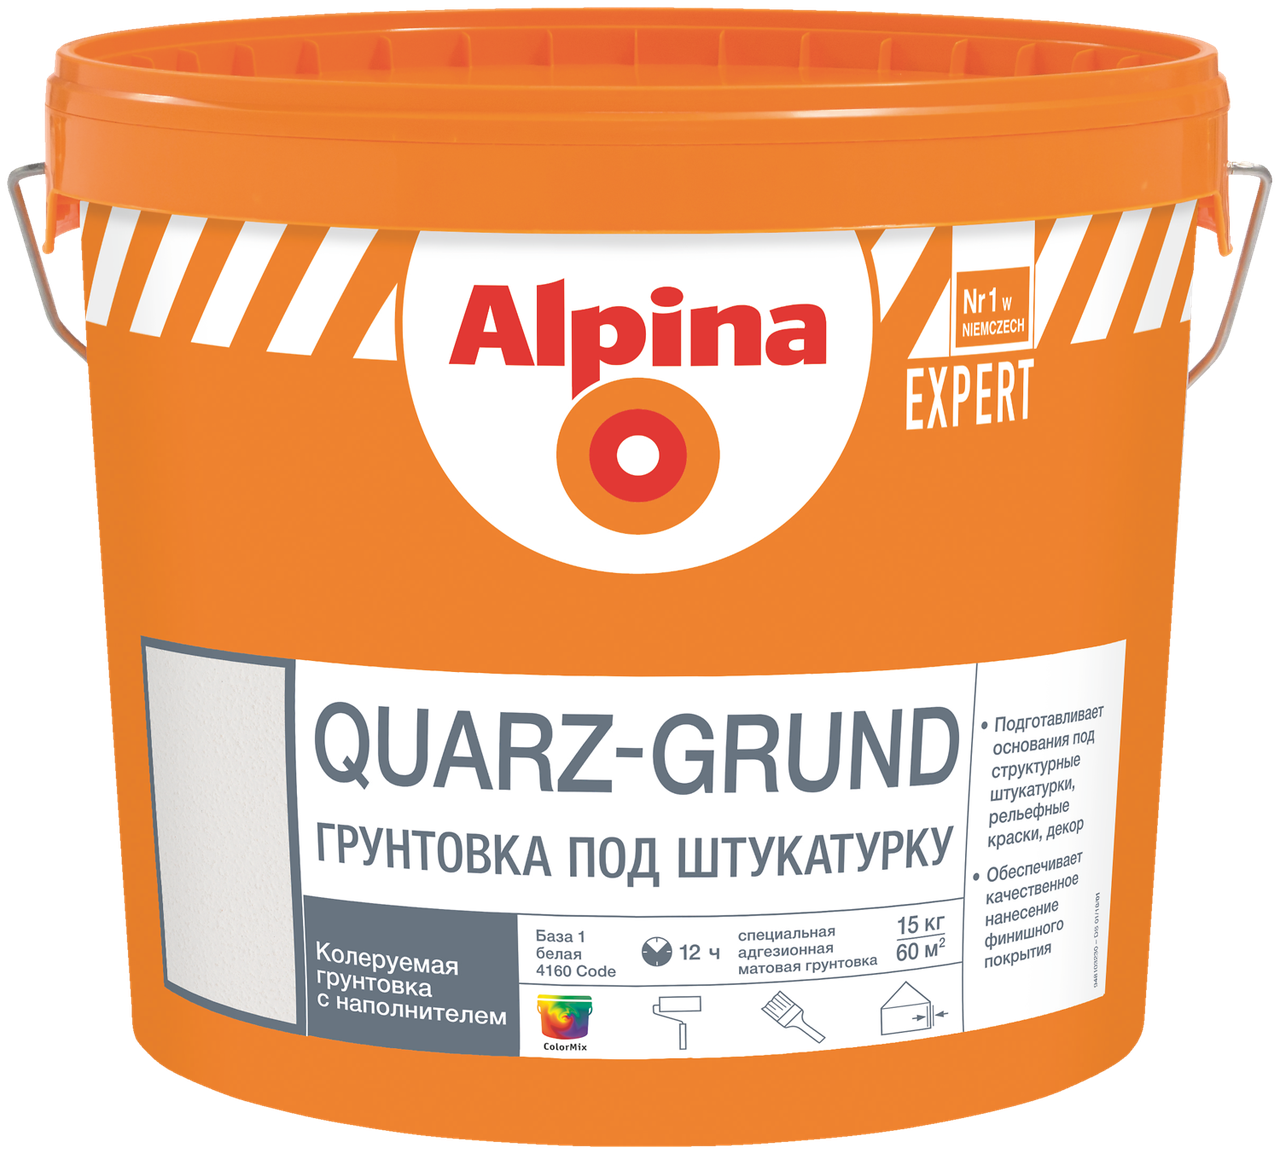 Alpina EXPERT Quarz-Grund База1 15кг